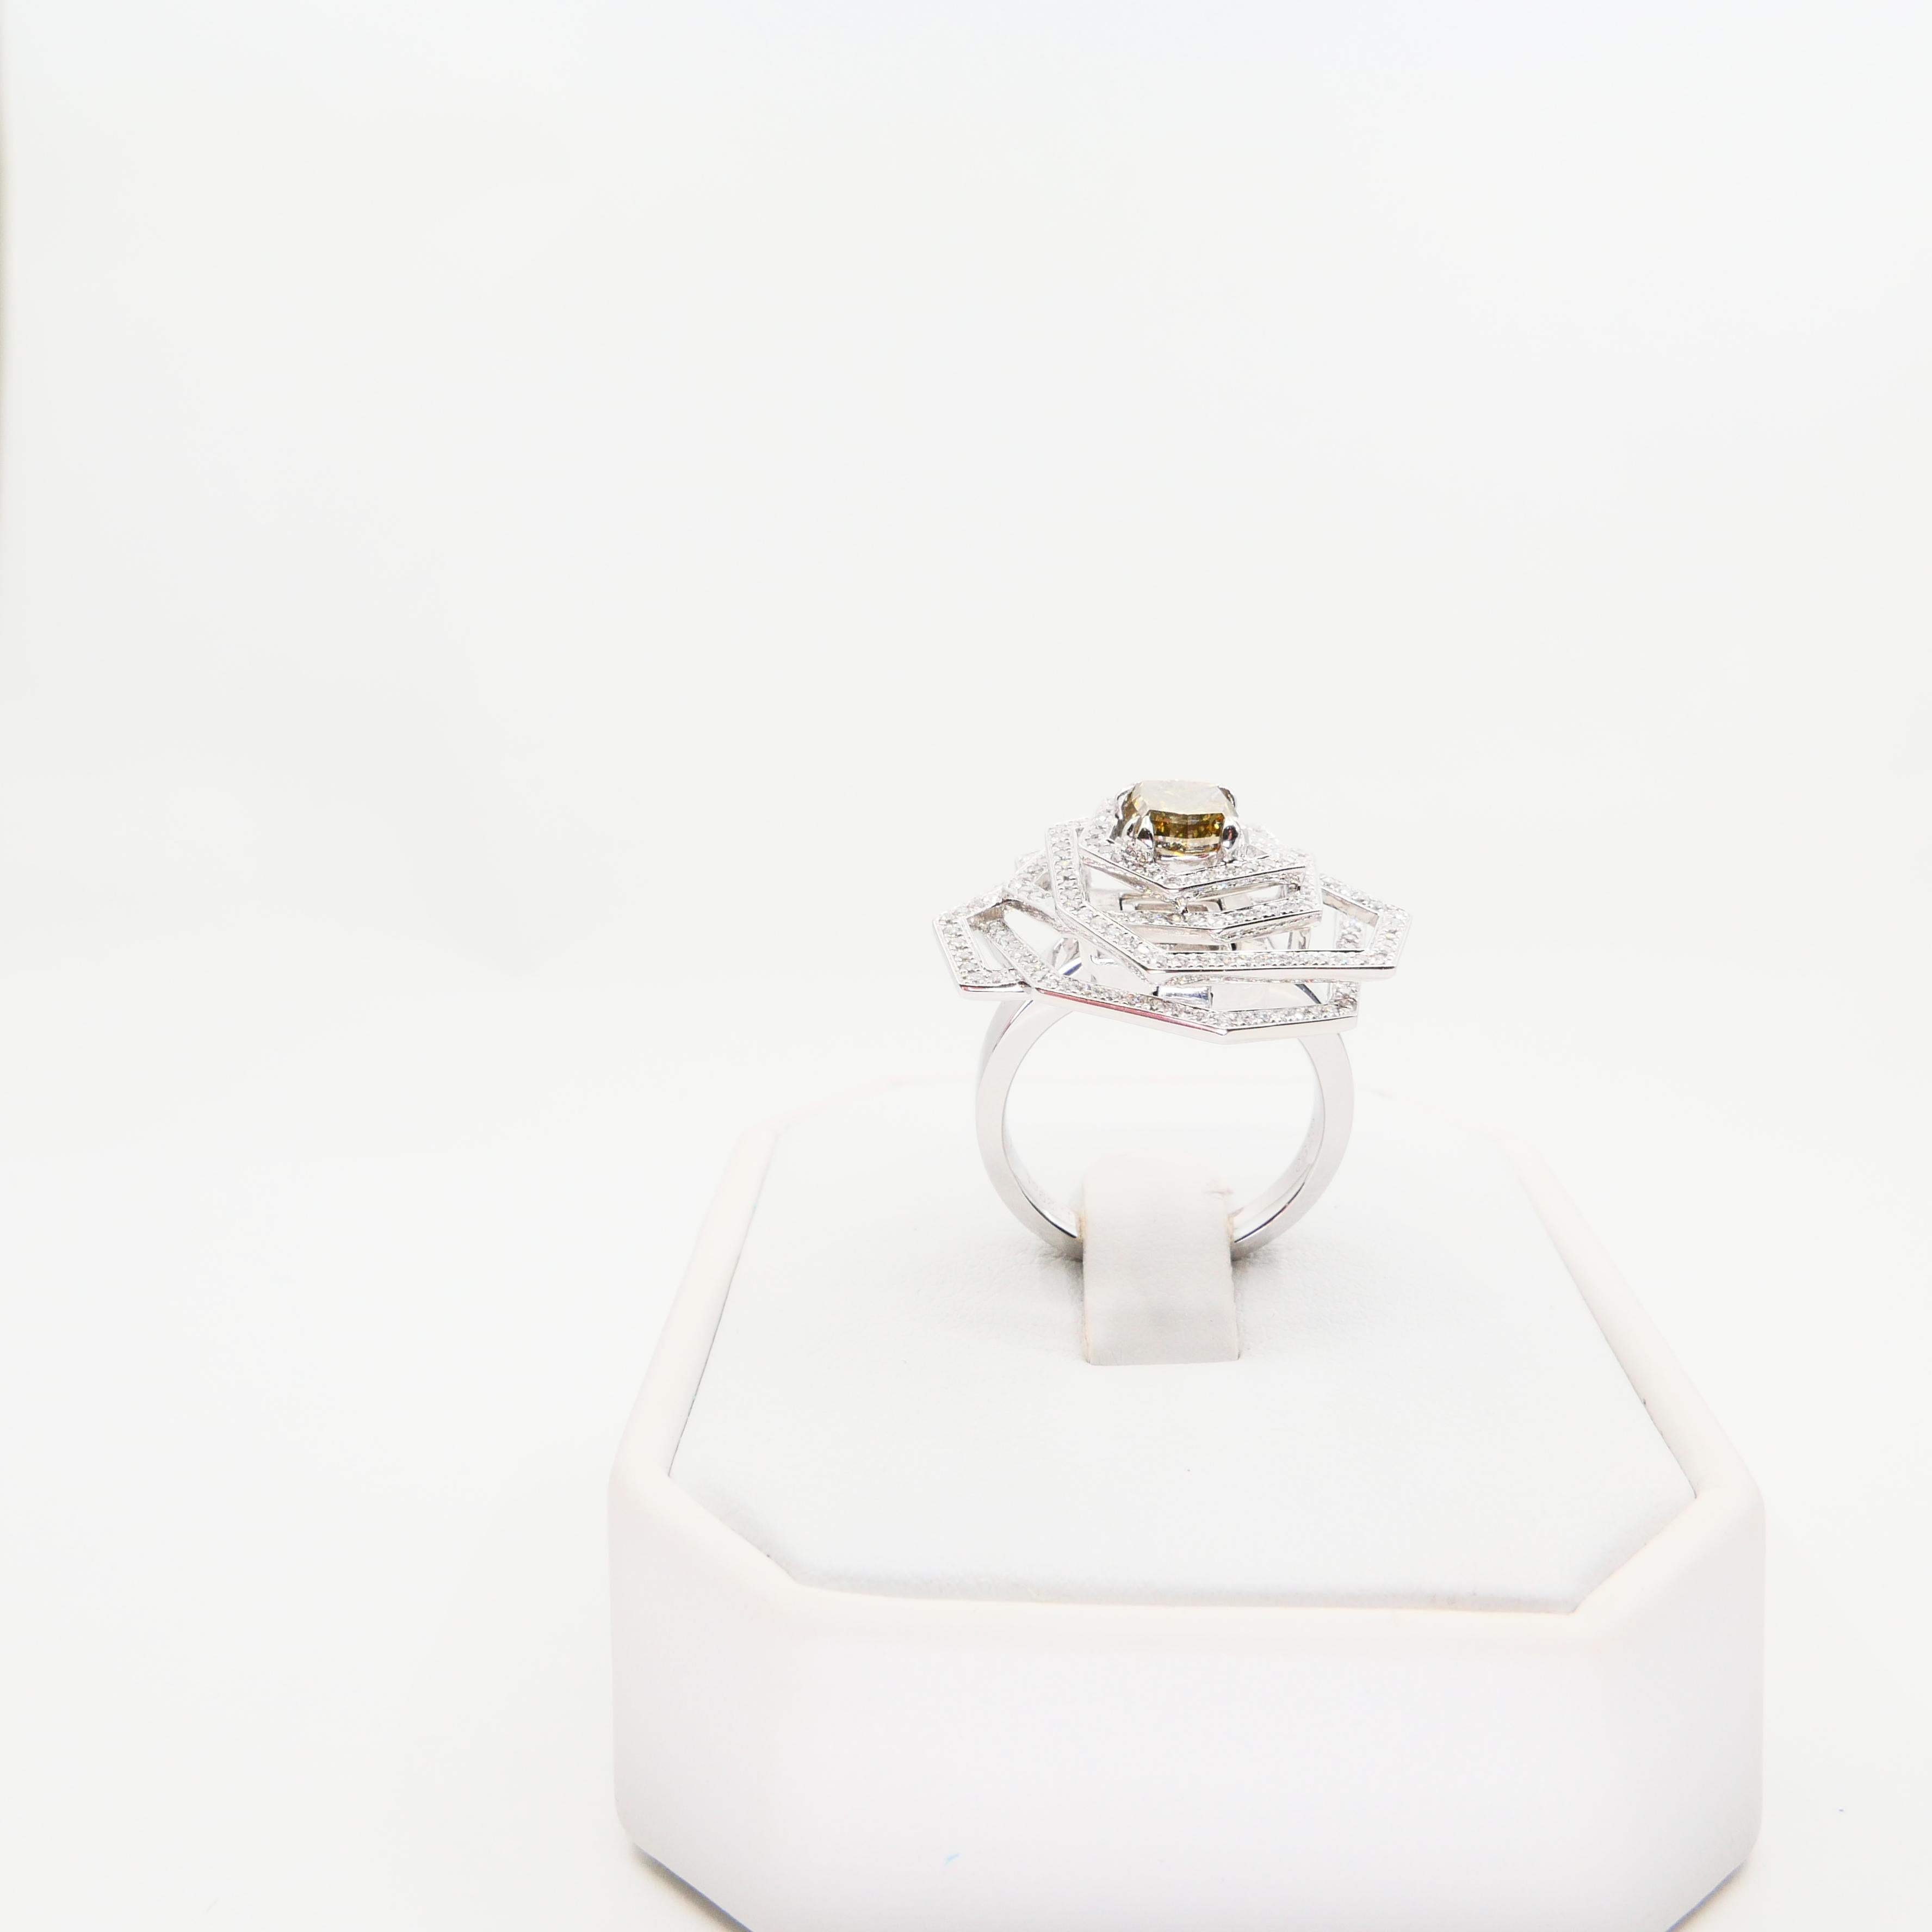 Certified Octagonal Cognac Diamond 1.29 Carat Flower Pendant & Cocktail Ring 9